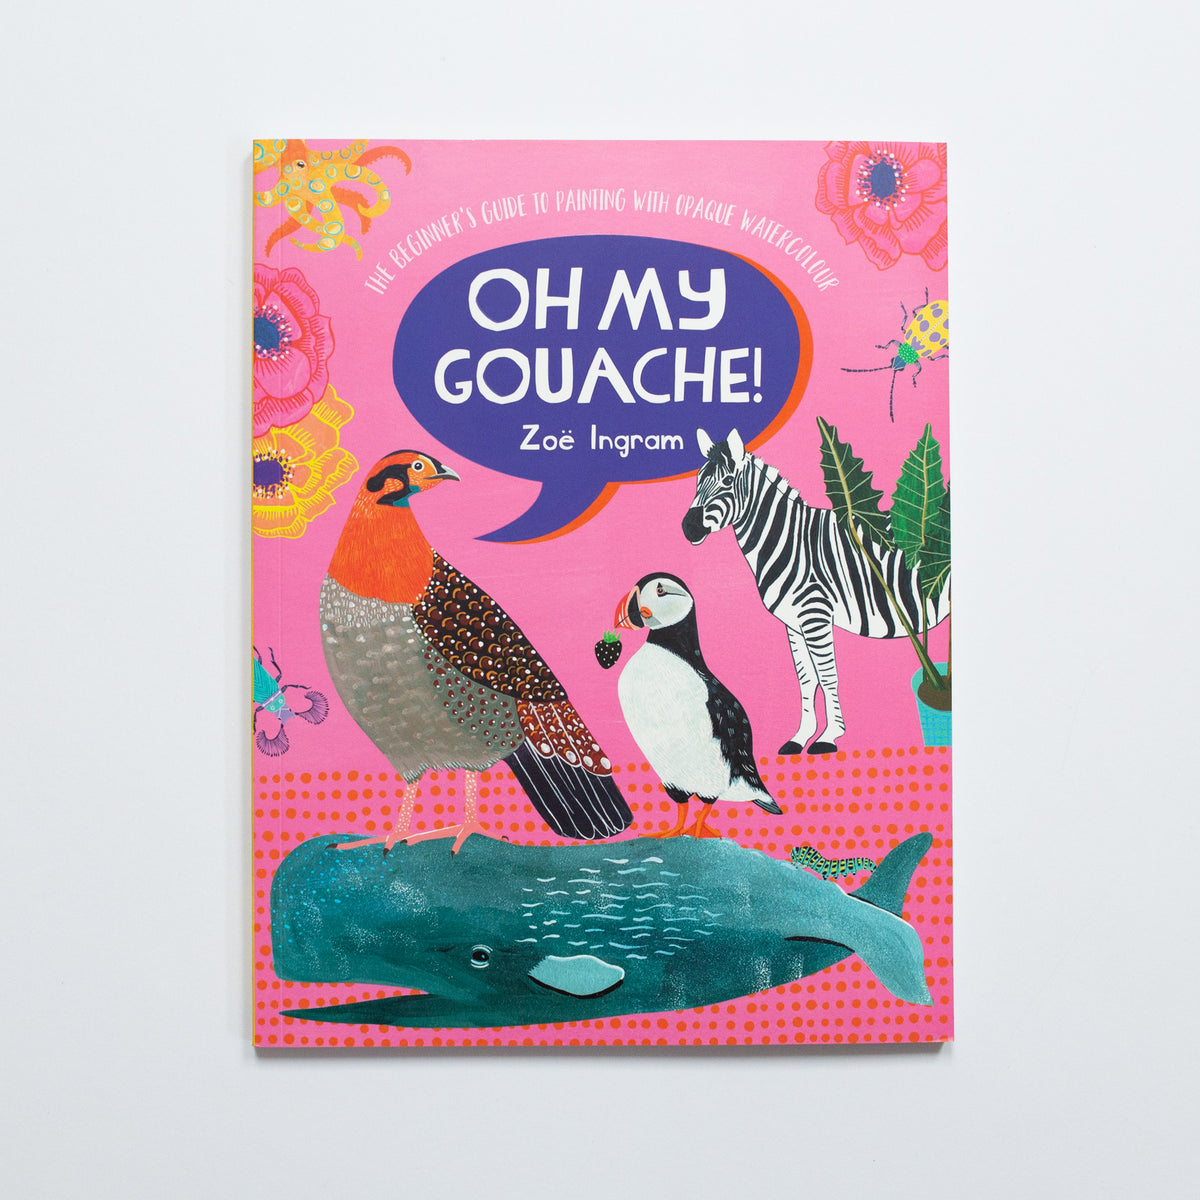 Oh My Gouache by Zoë Ingram